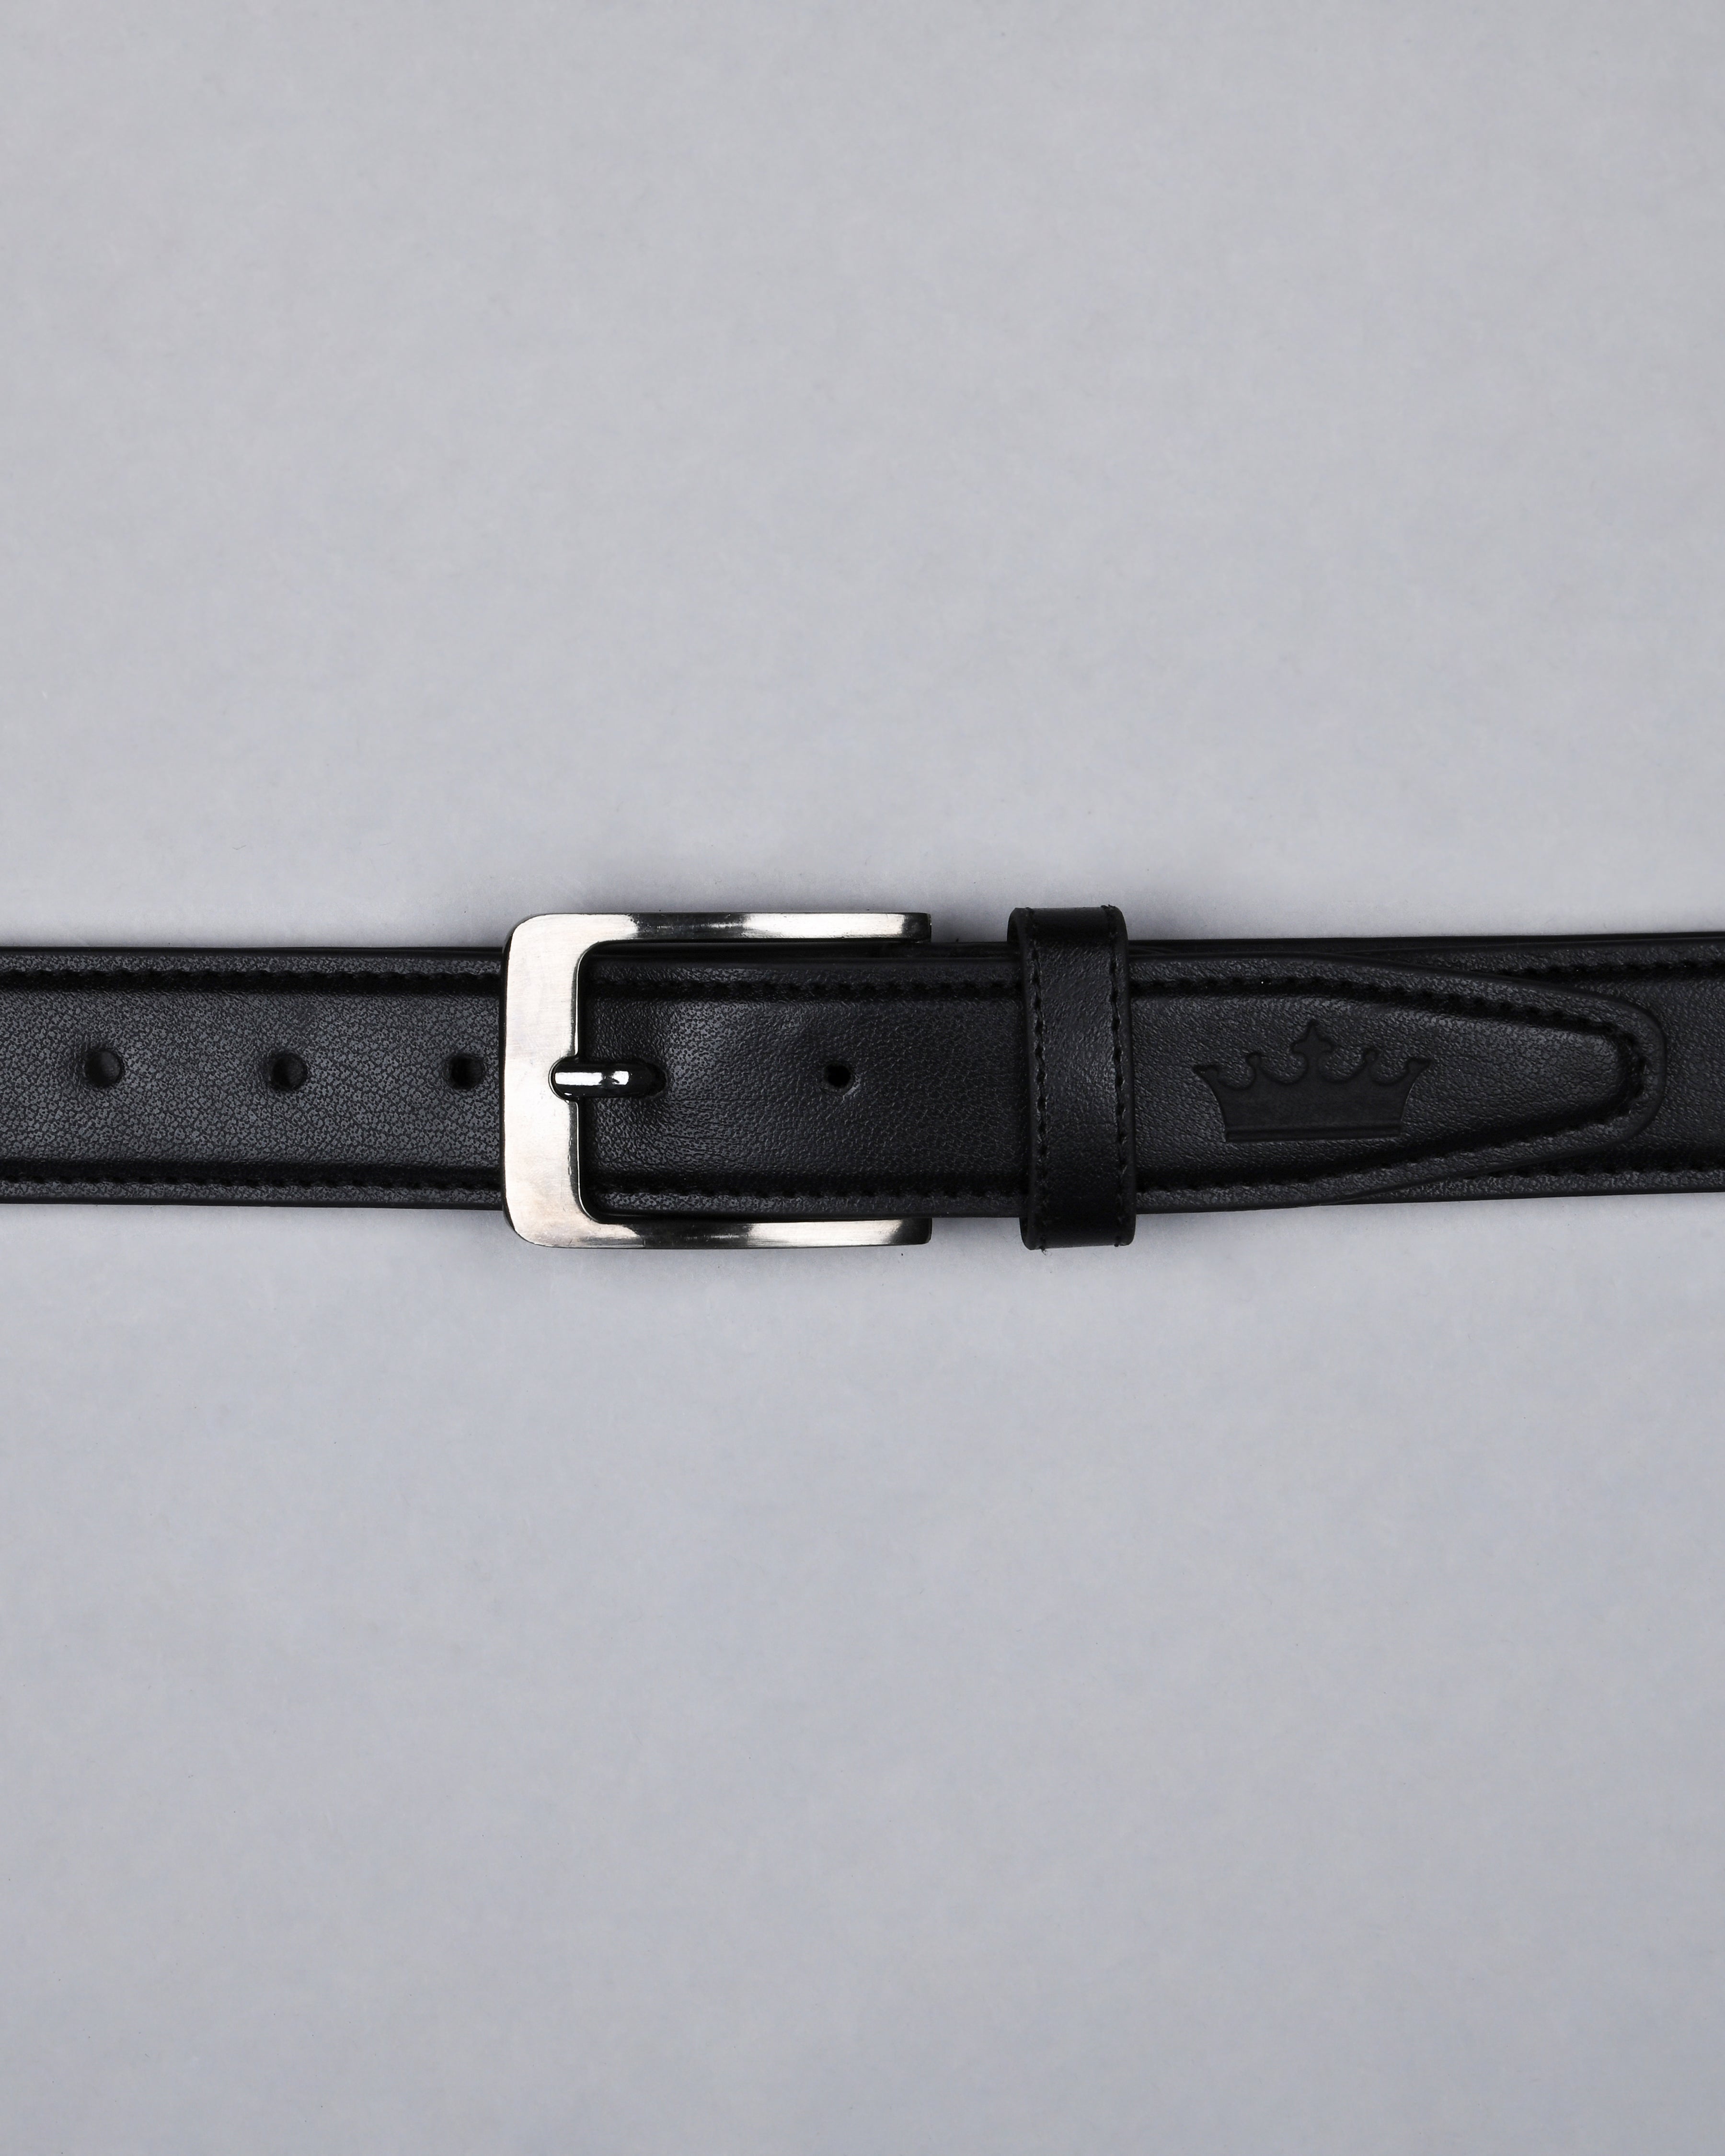 Jade Black Subtle Textured Vegan Leather Handcrafted Belt BT09-28, BT09-30, BT09-36, BT09-32, BT09-38, BT09-34